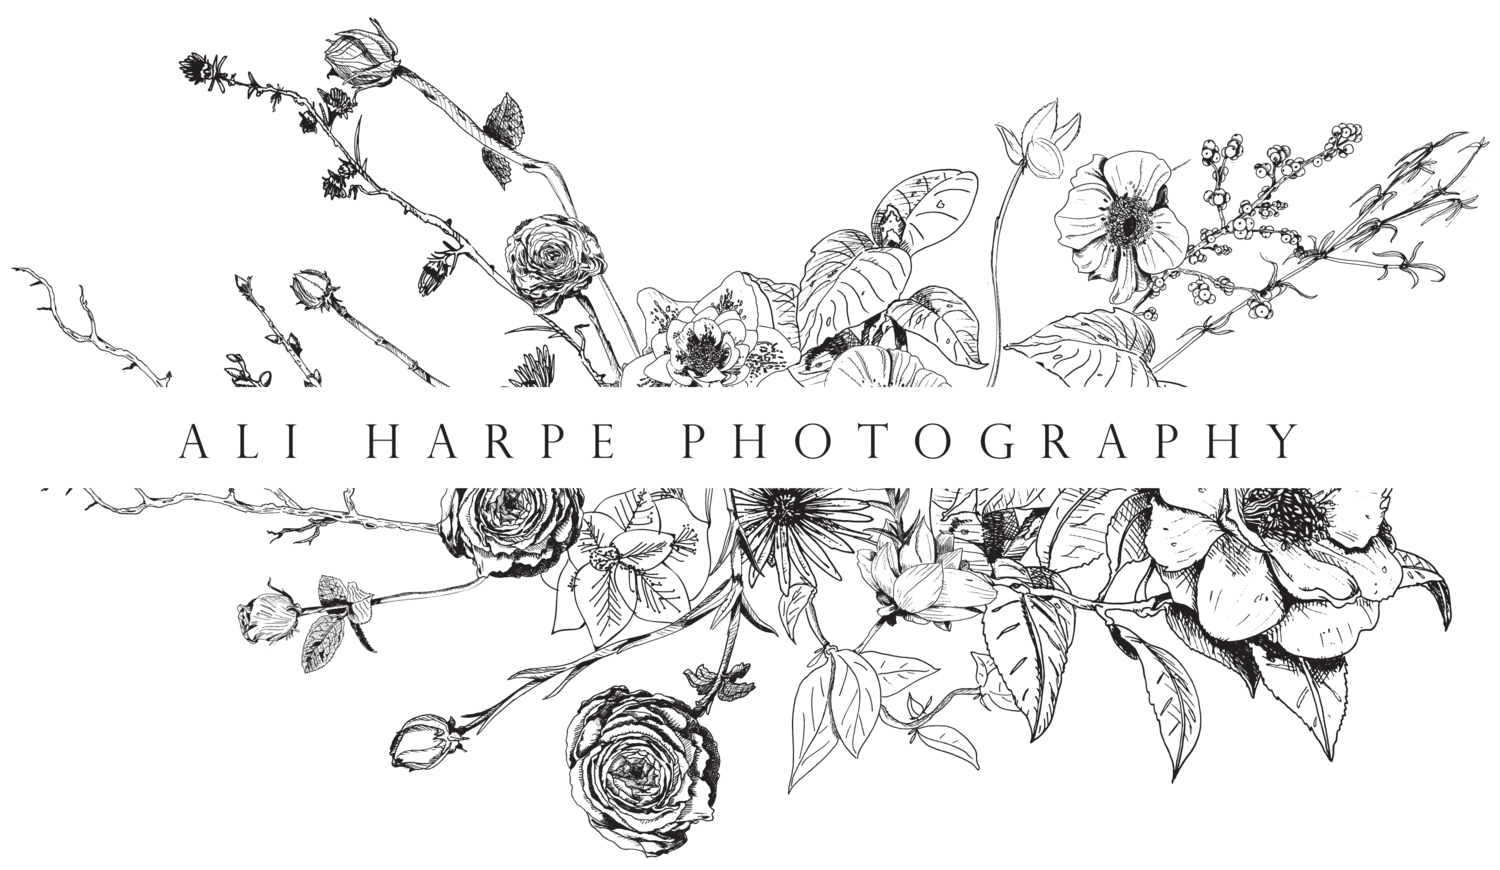 ALI HARPE PHOTOGRAPHY